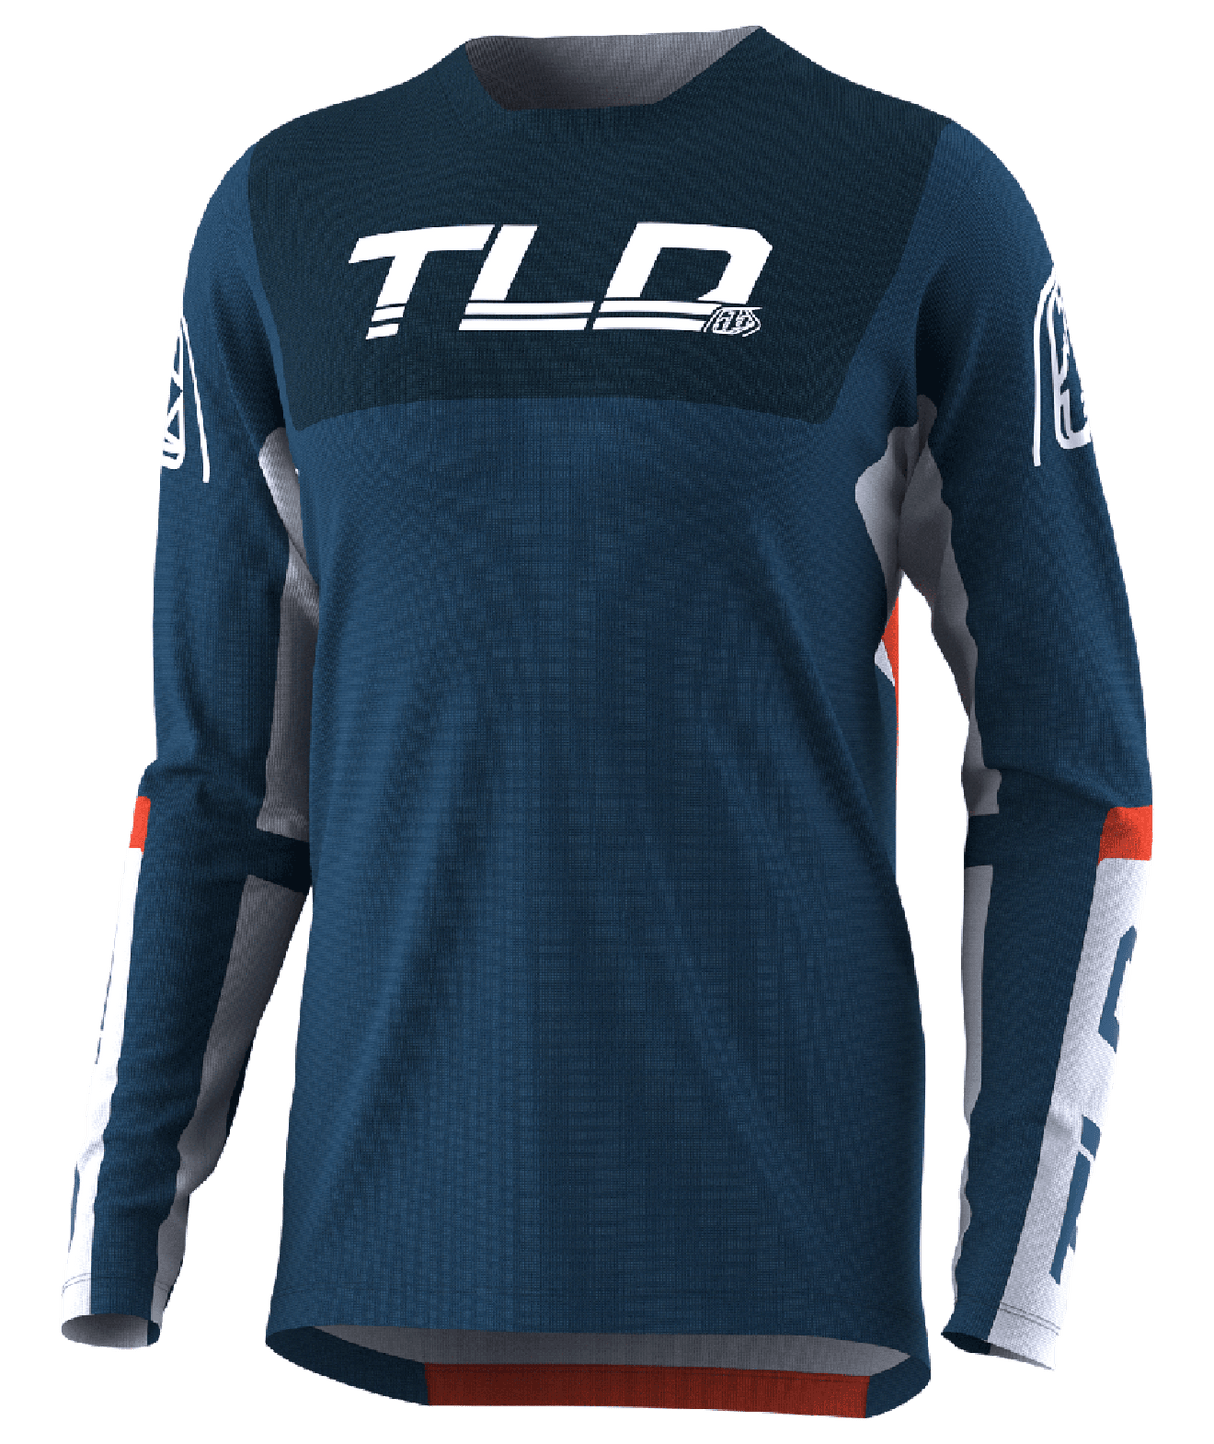 Troy Lee Designs jersey 